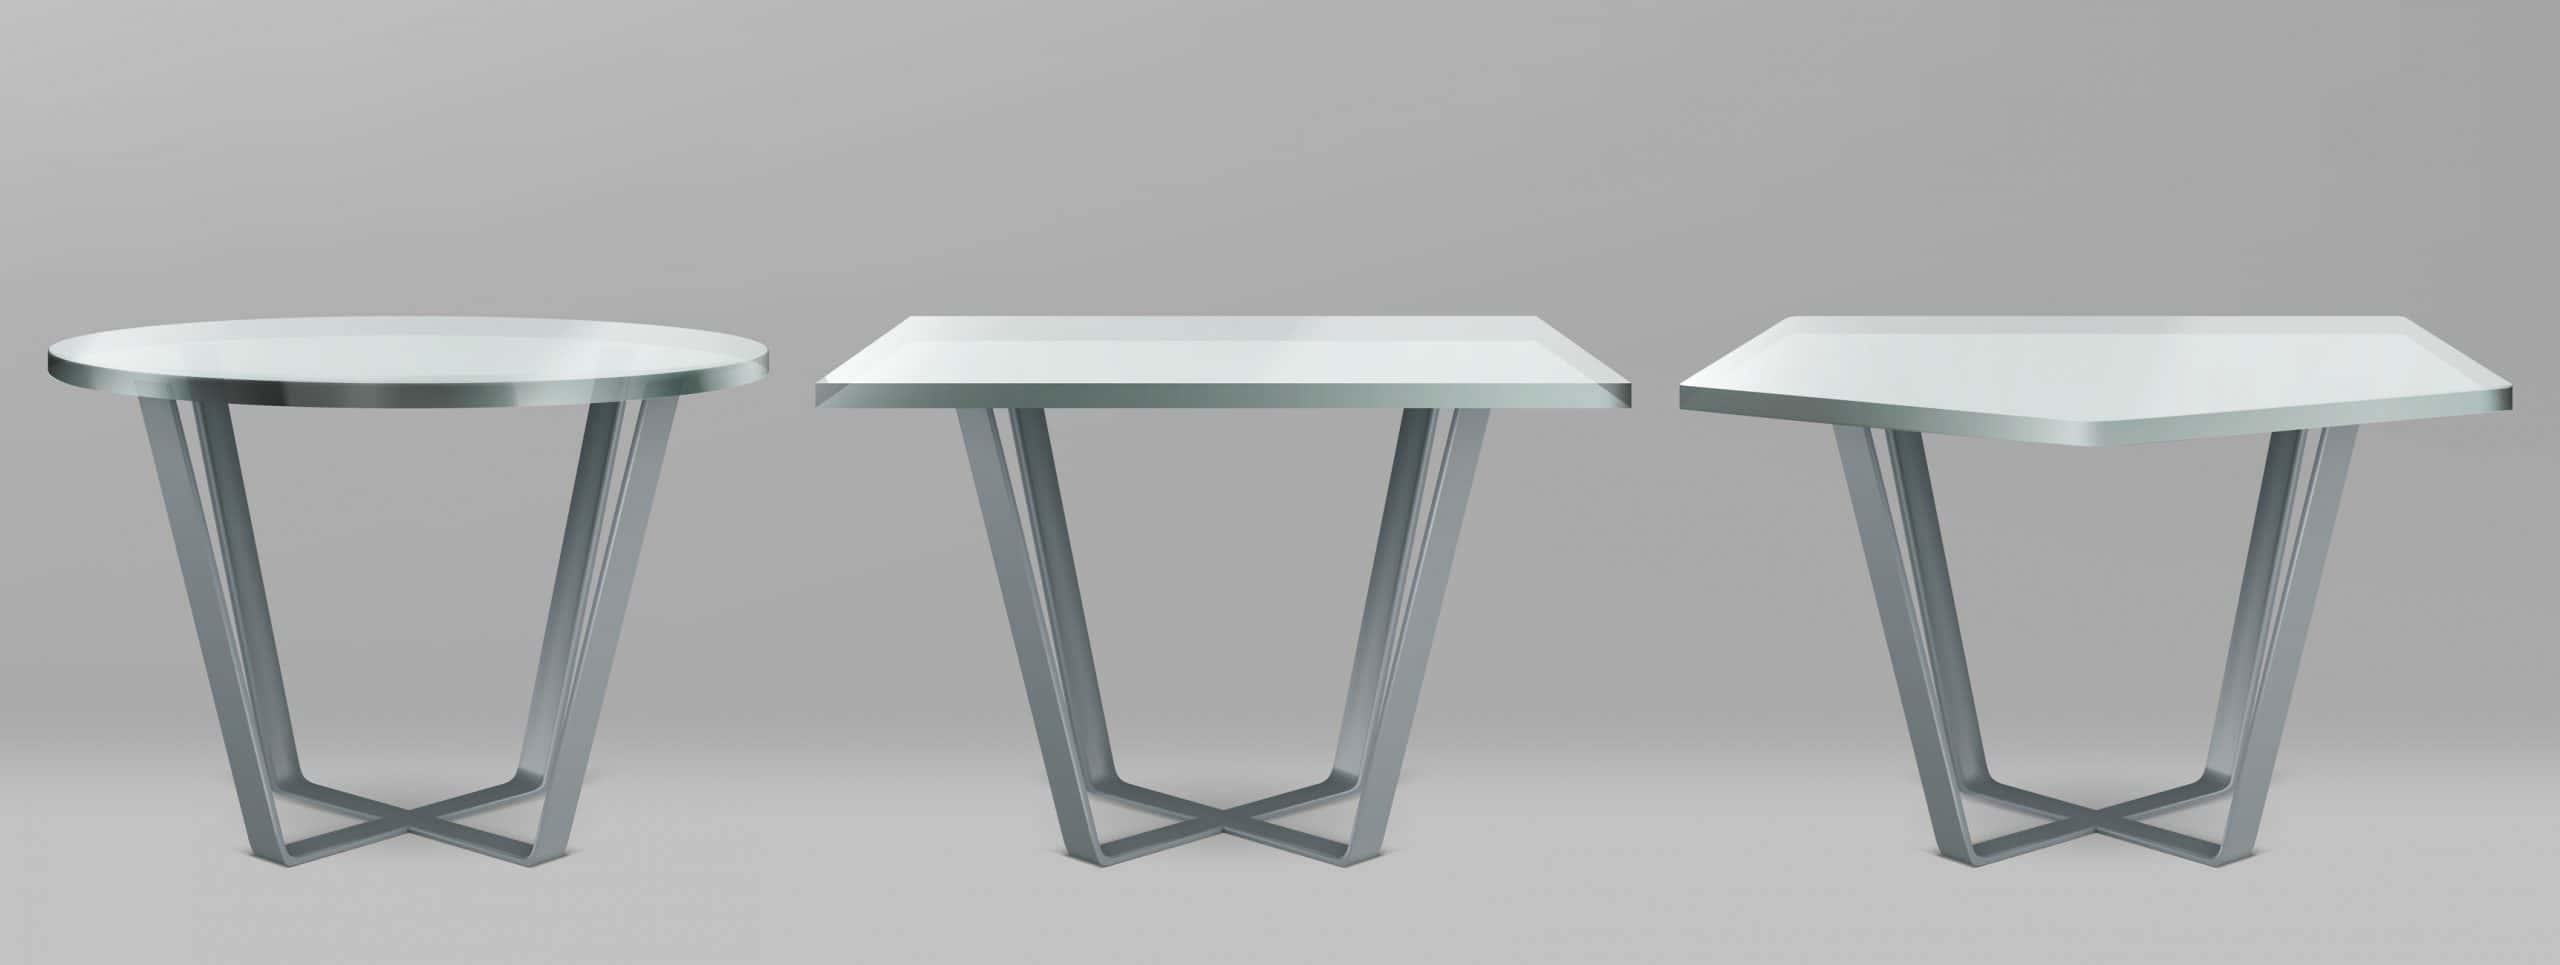 stylish origami table furniture